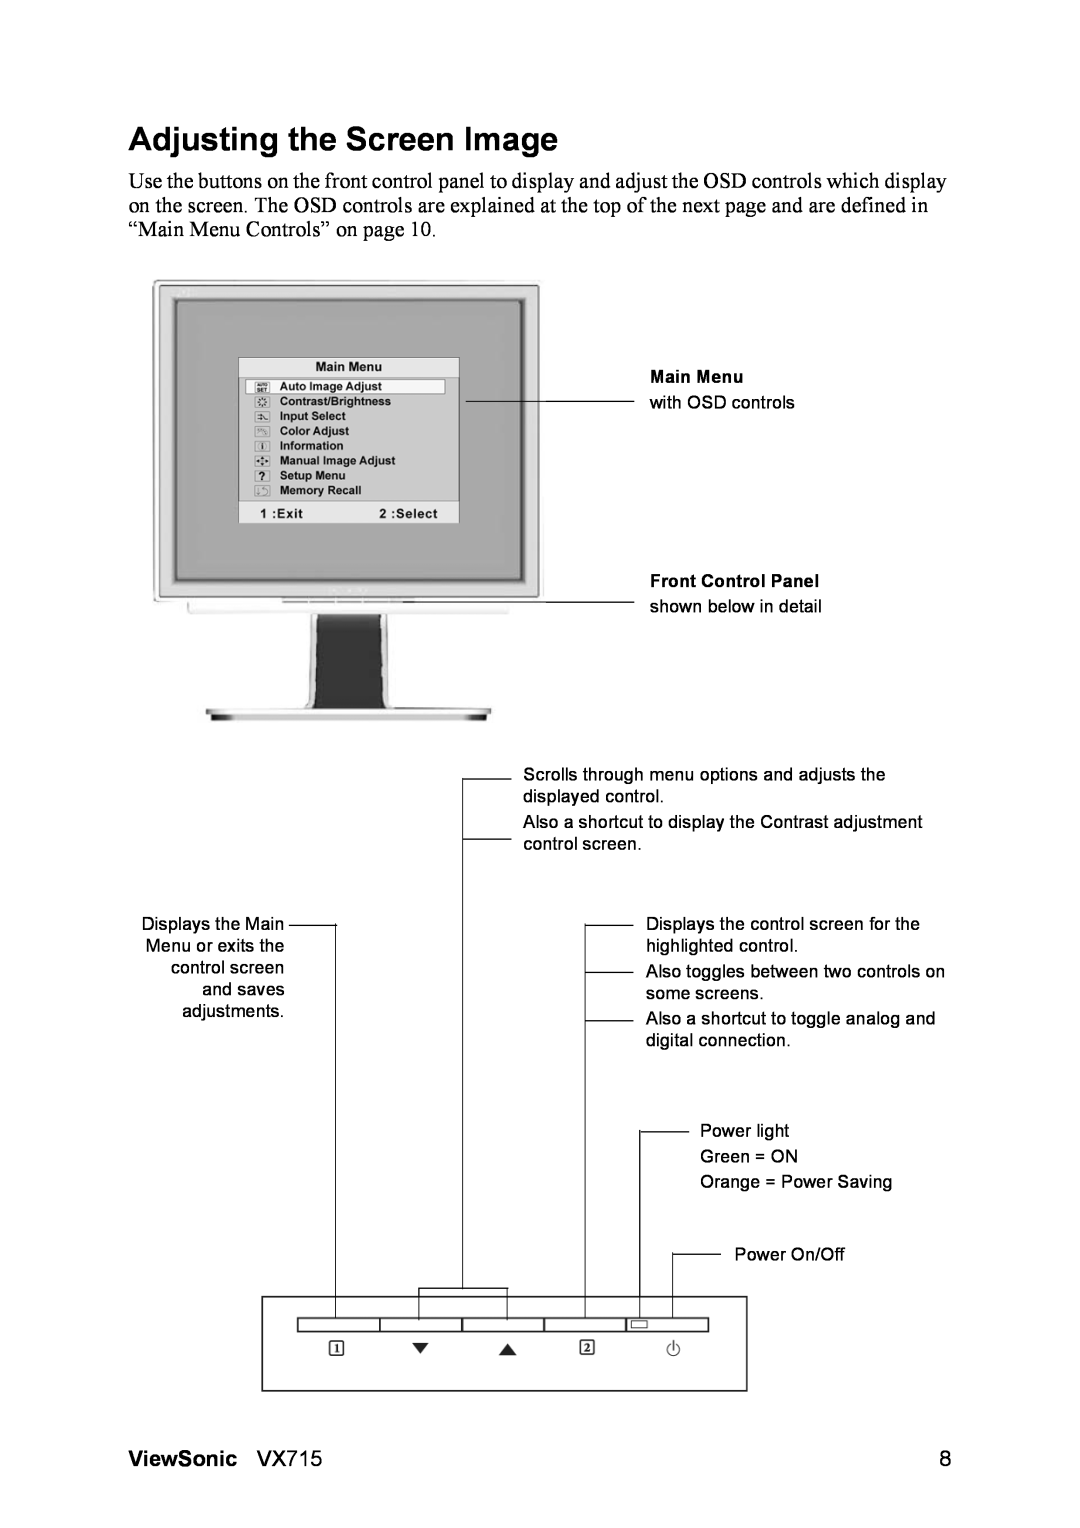 ViewSonic VX715 manual Adjusting the Screen Image, ViewSonic, Main Menu, Front Control Panel 